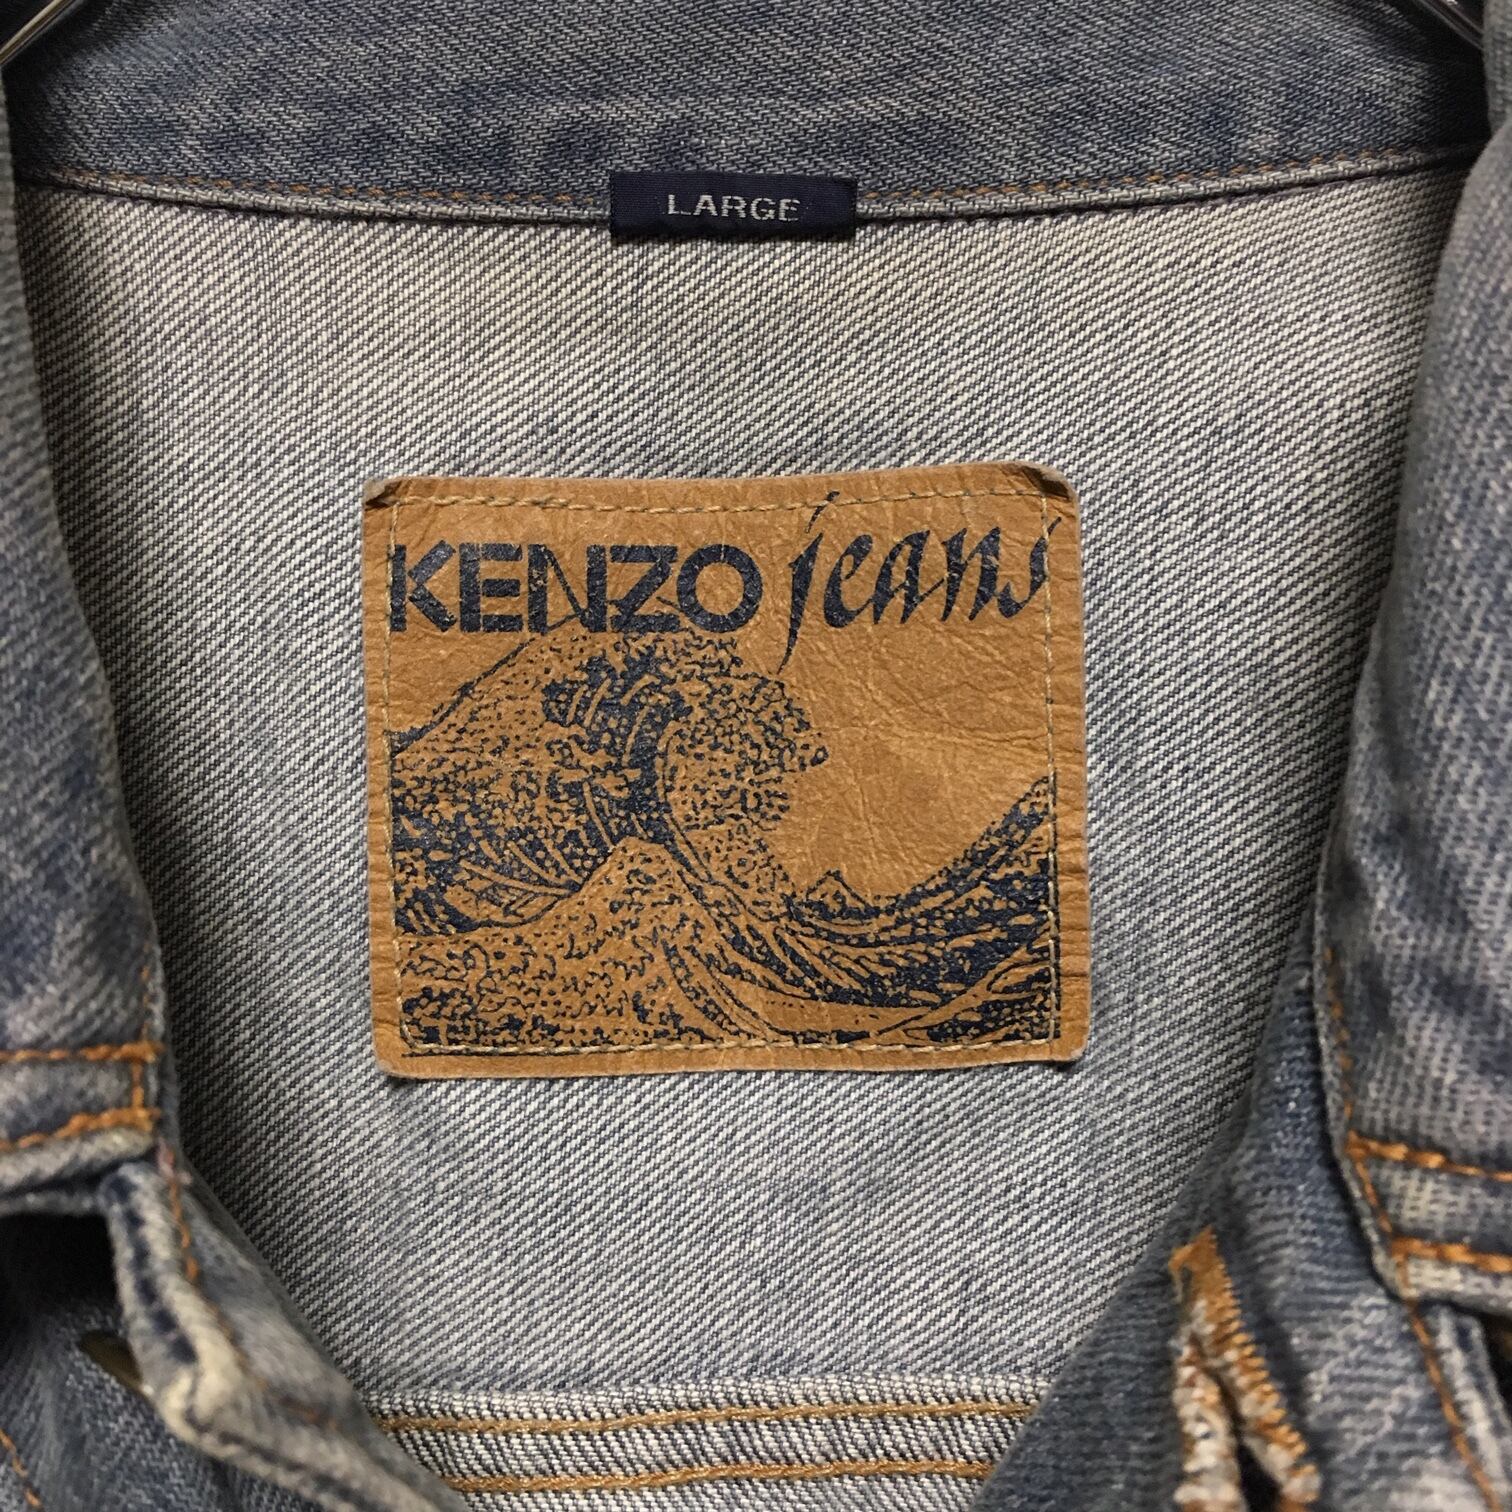 KENZO / KENZO JEANS 90s denim jacket / ケンゾー デニムジャケット G 